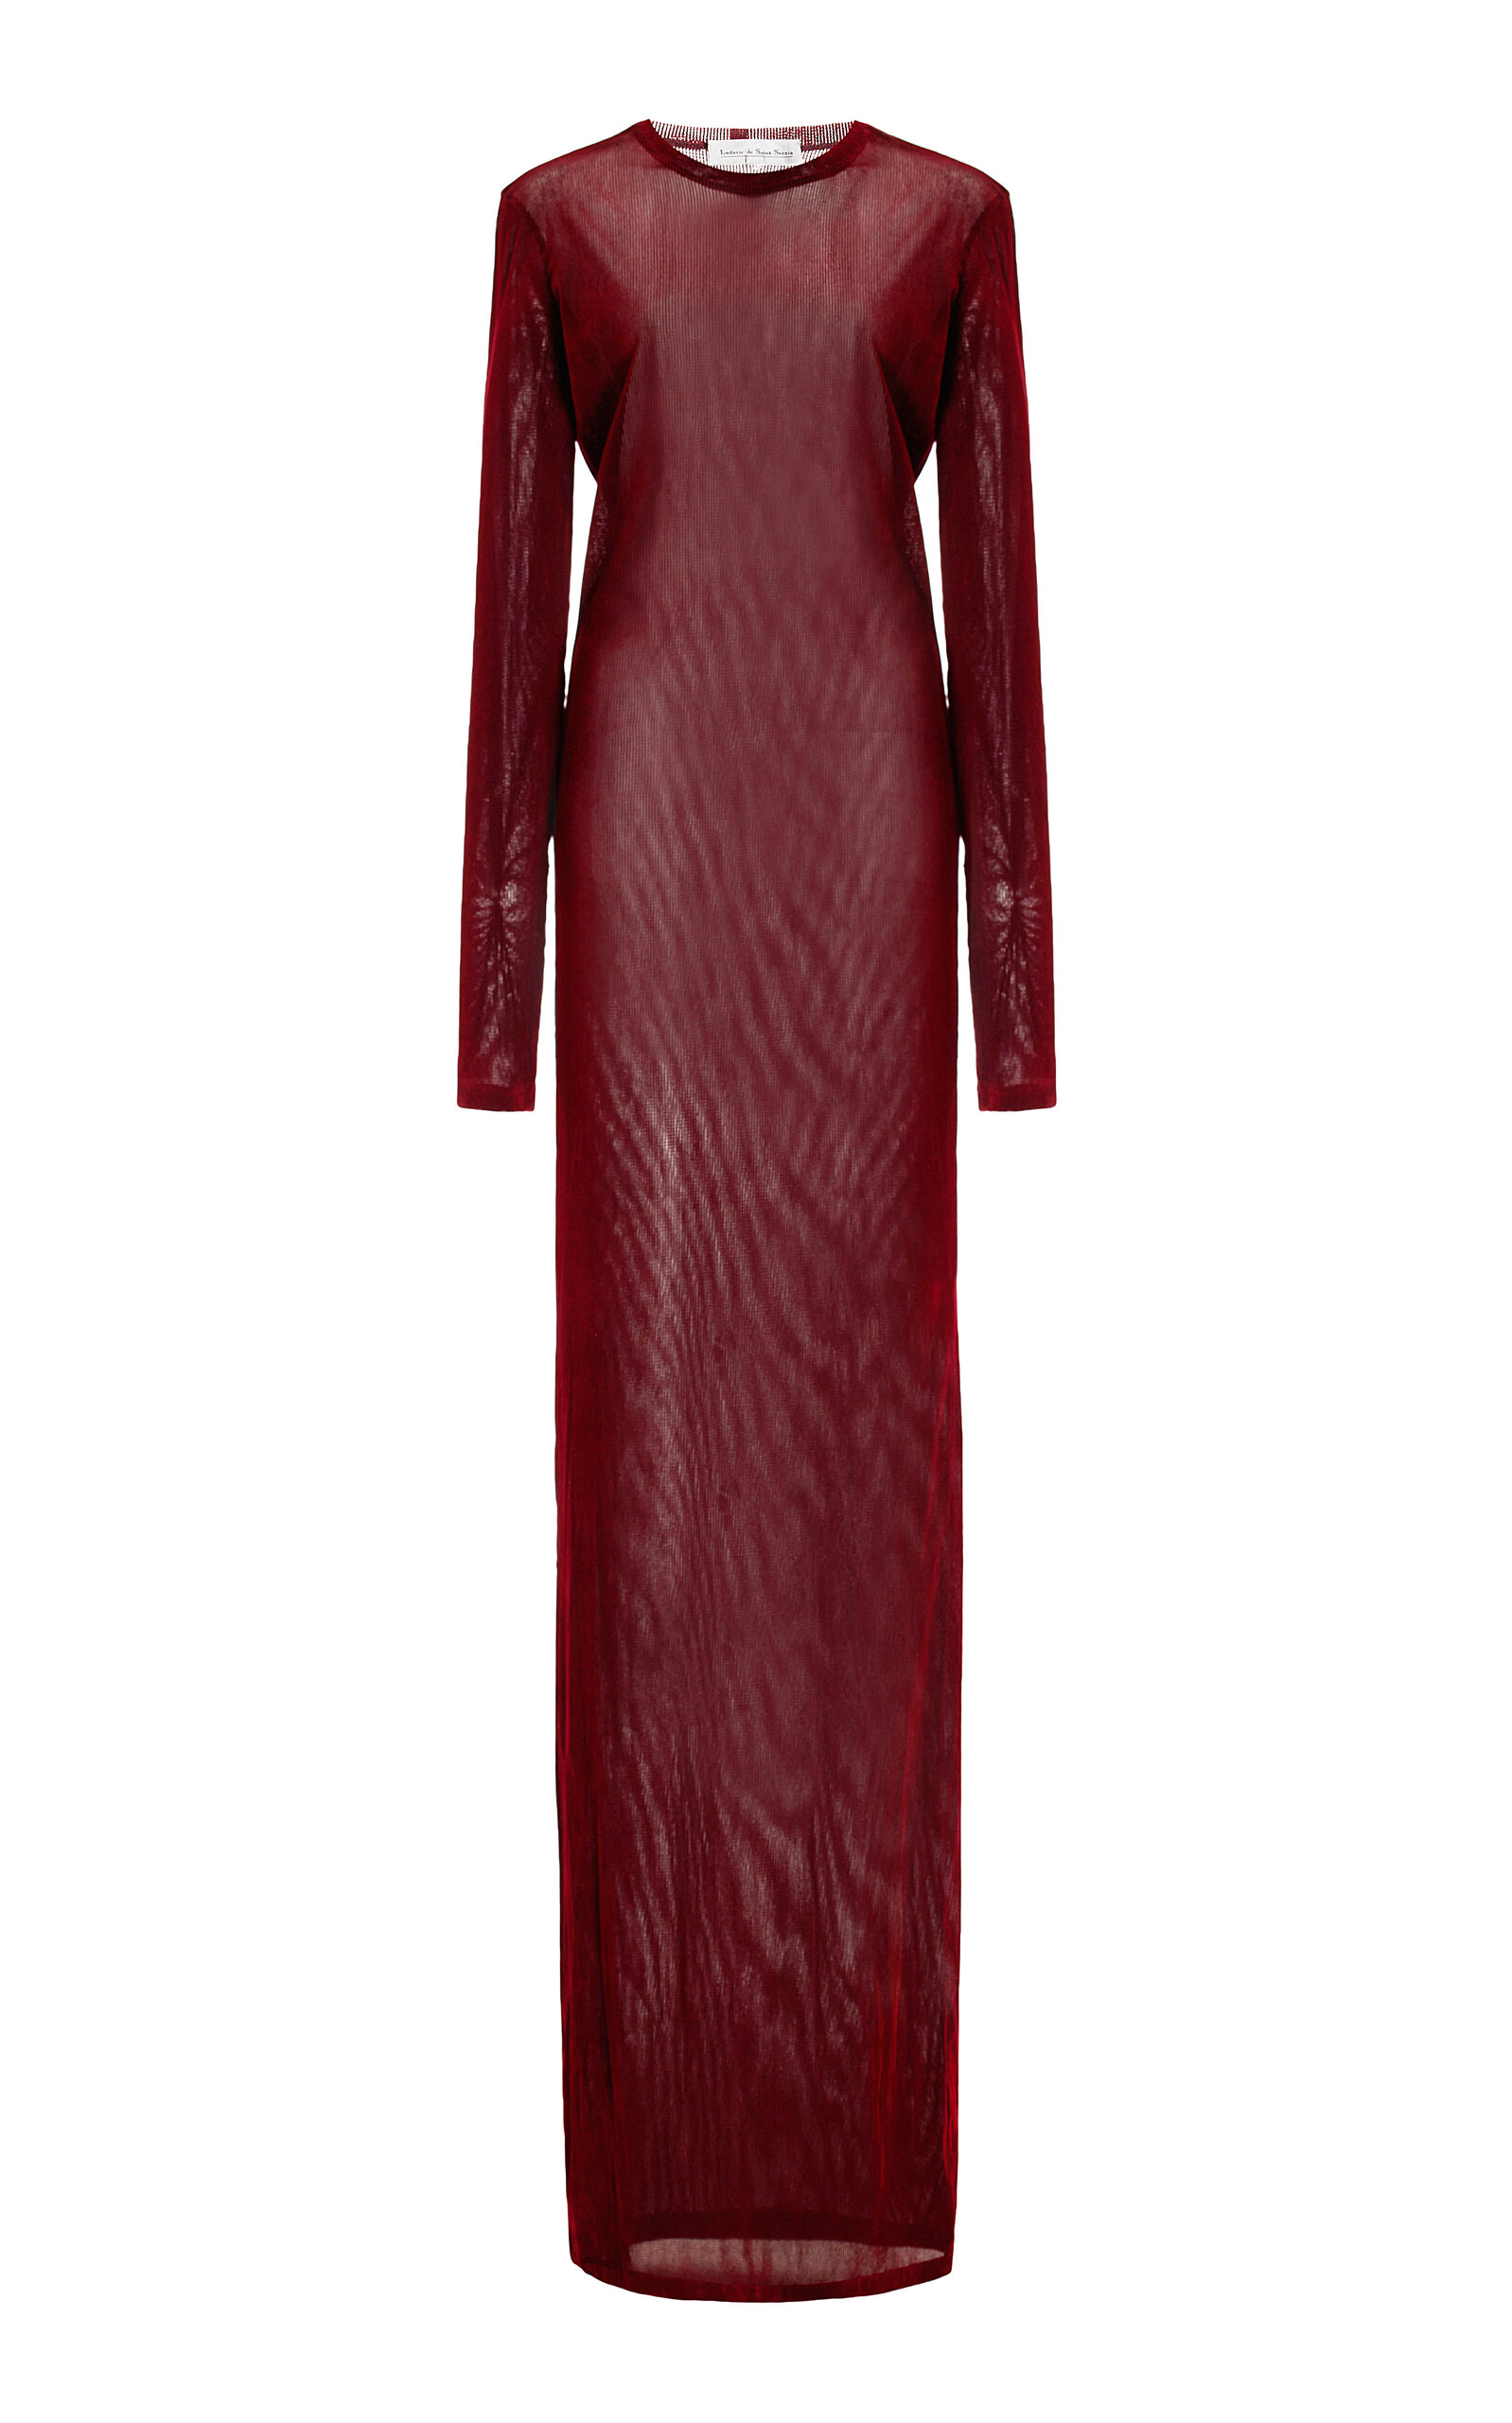 Ludovic de Saint Sernin - Knit Mesh Maxi Dress - Red - L - Only At Moda Operandi